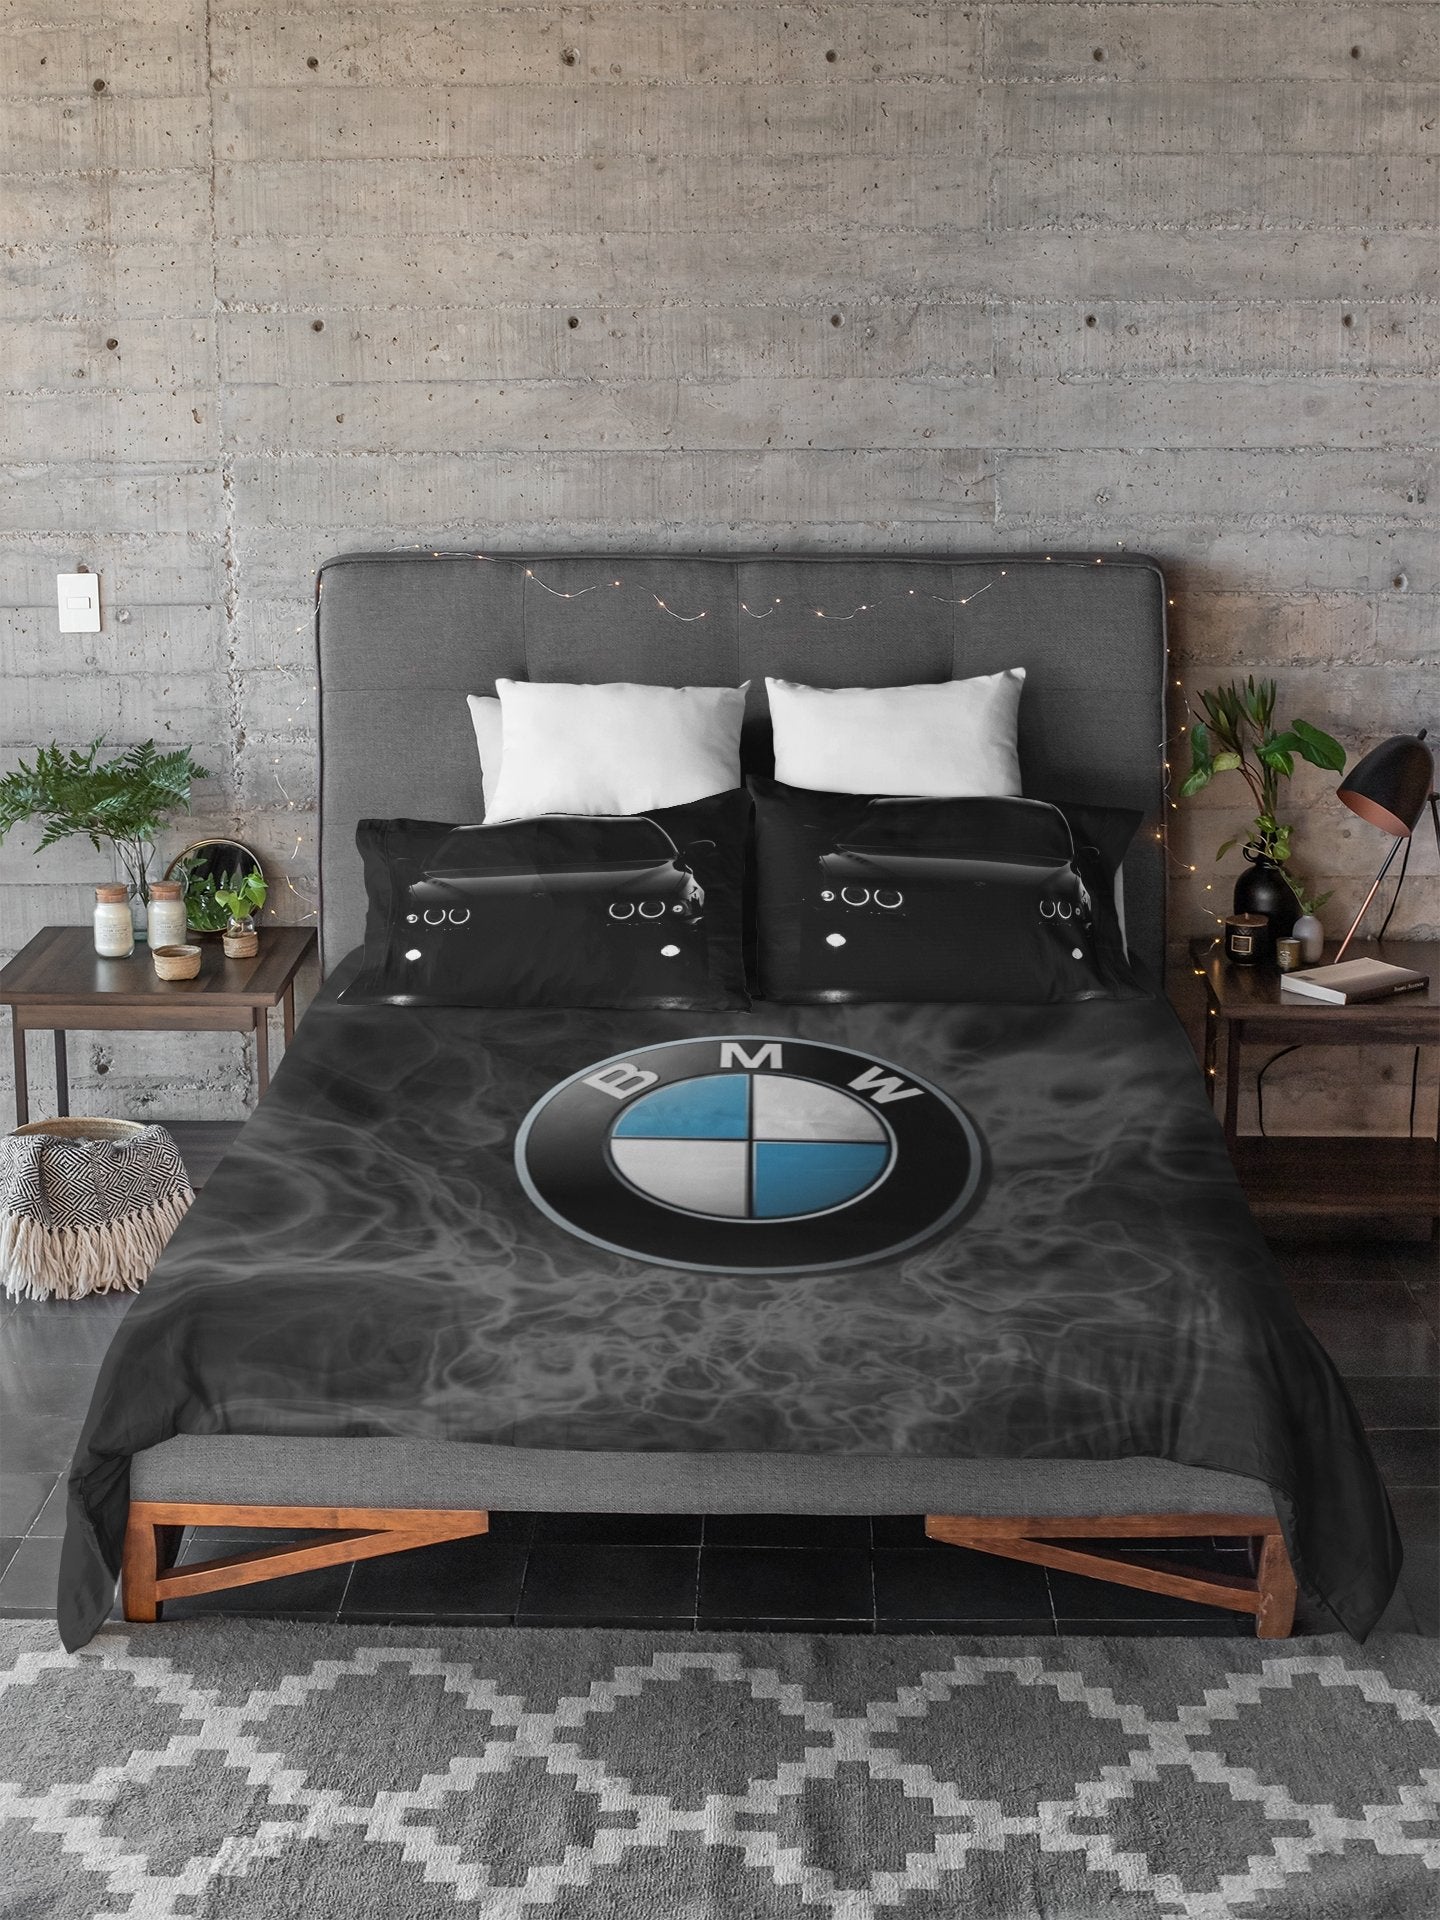 Duvet Cover featuring BMW Logo, Pillows Featuring M3